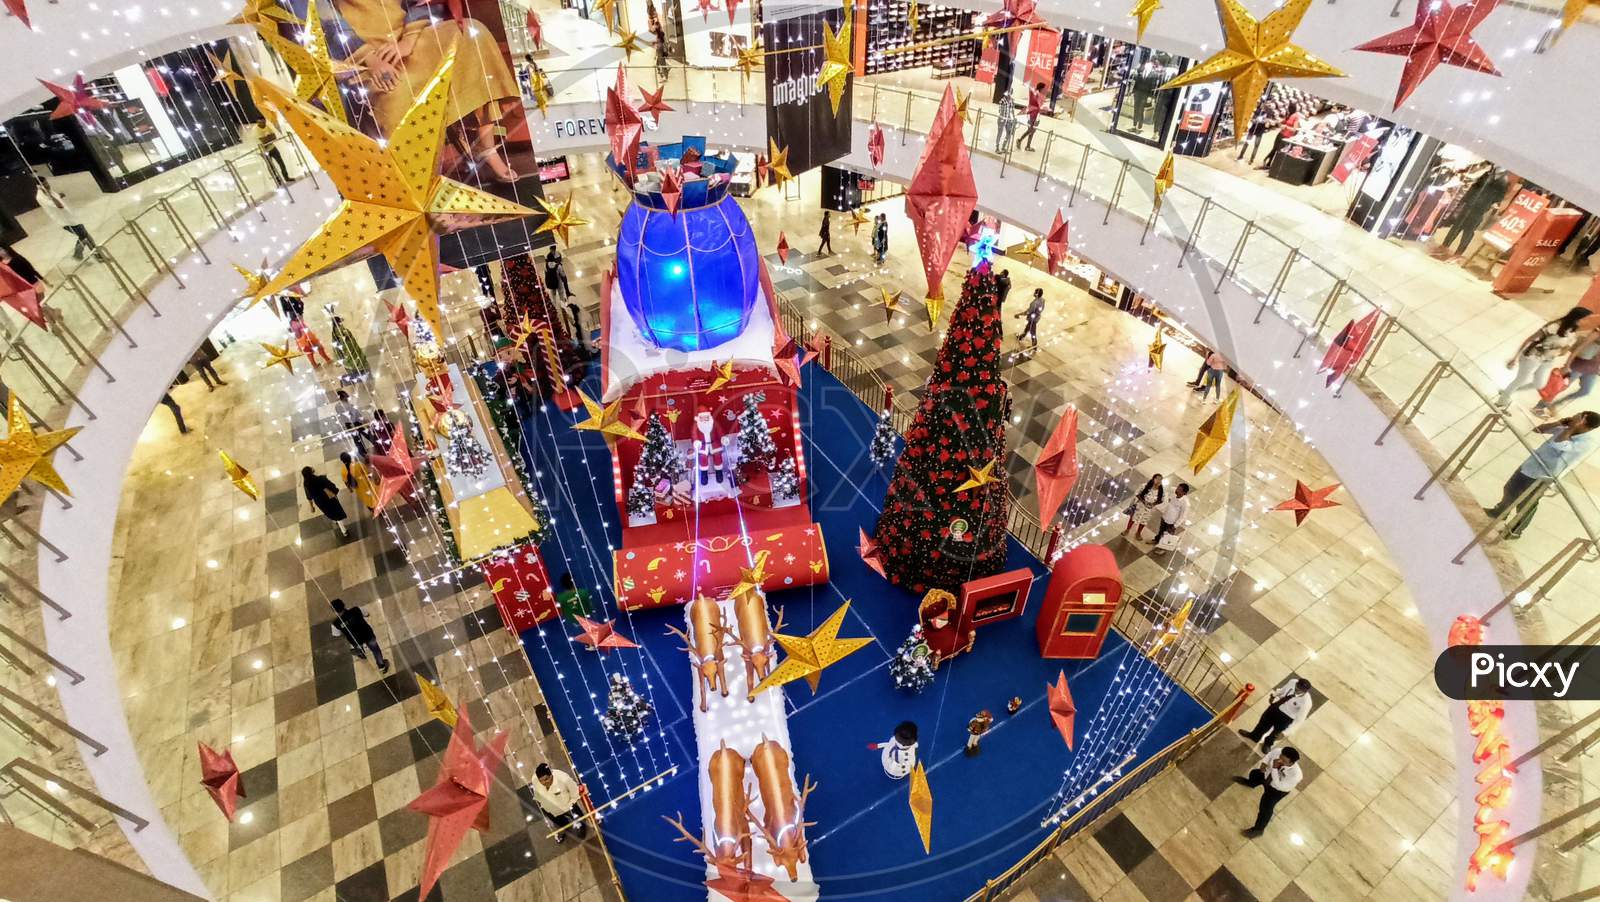 Christmas Celebrations at Forum Sujana Mall Hyderabad